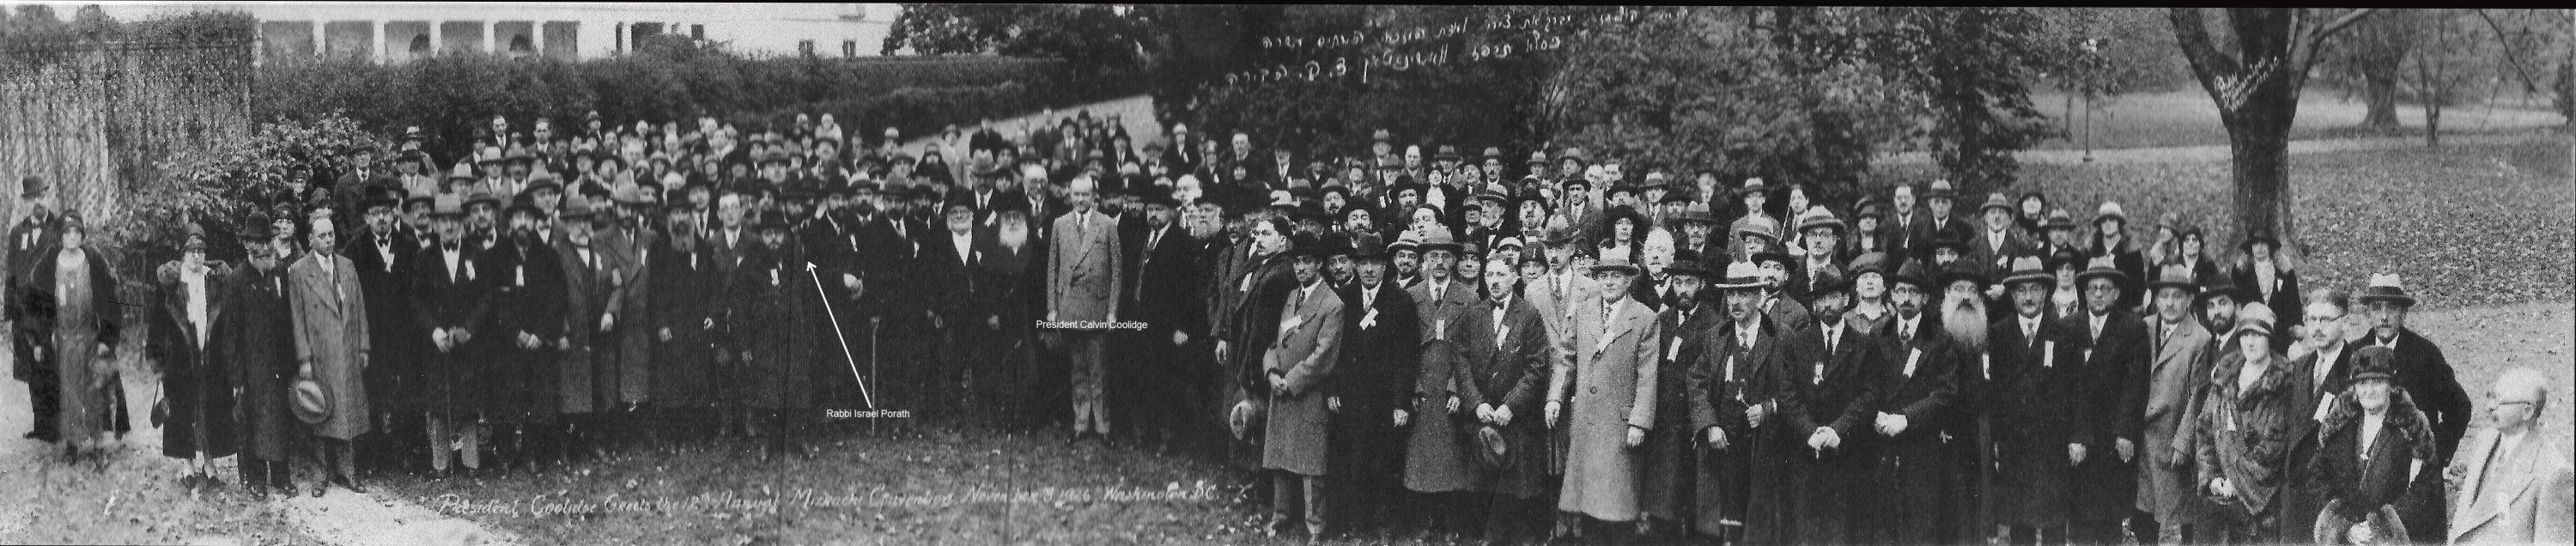 porath-1926-12 annual-mizrachi convention-coolidge-3000.jpg